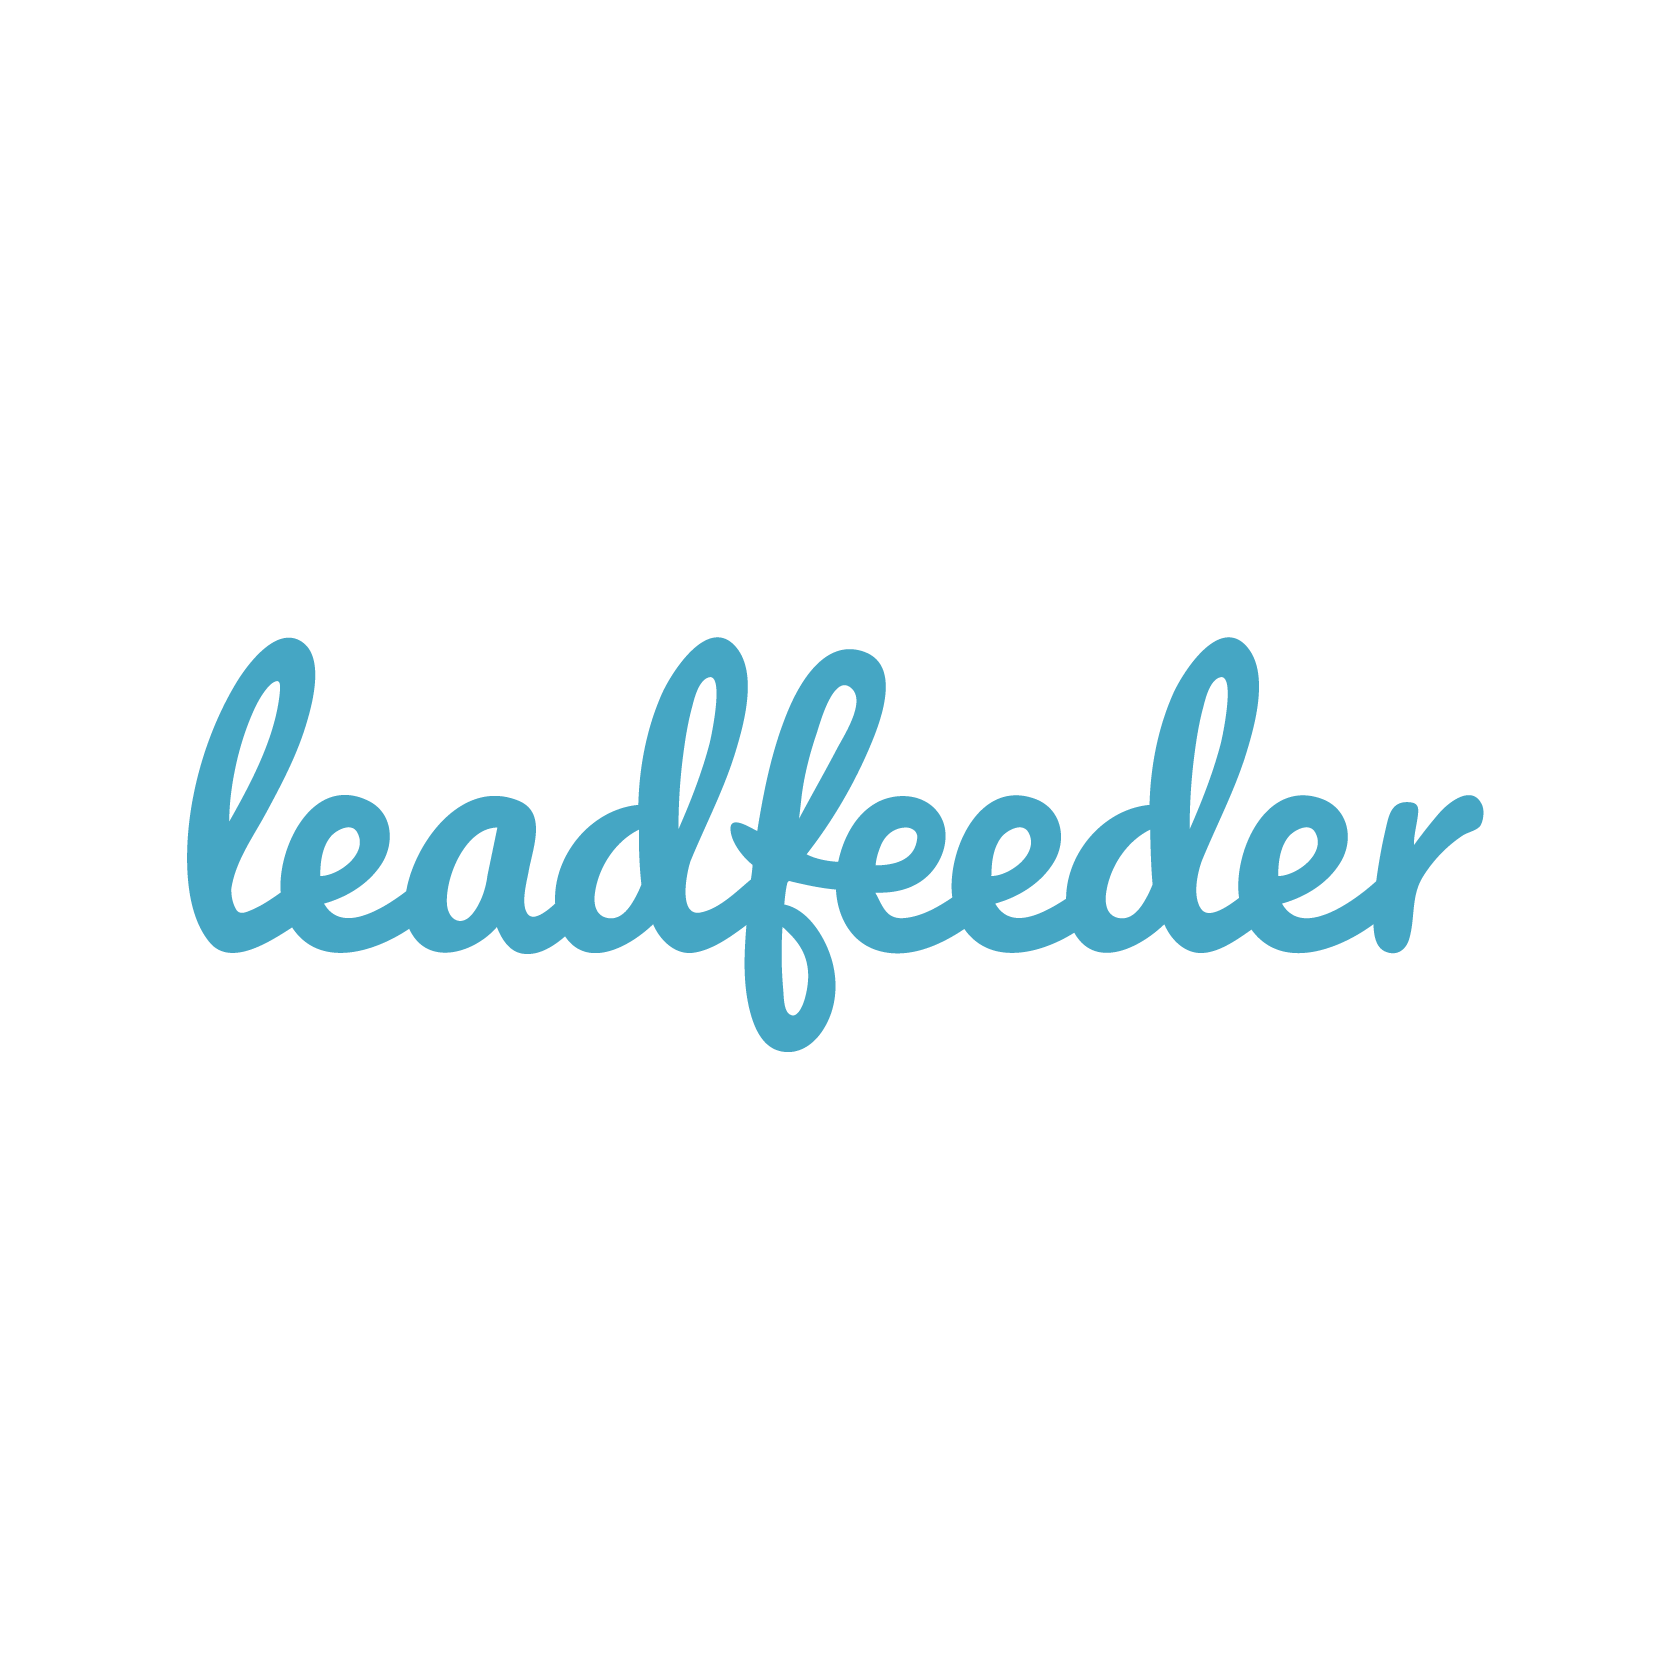 Latest Money-Saving Deals for Leadfeeder